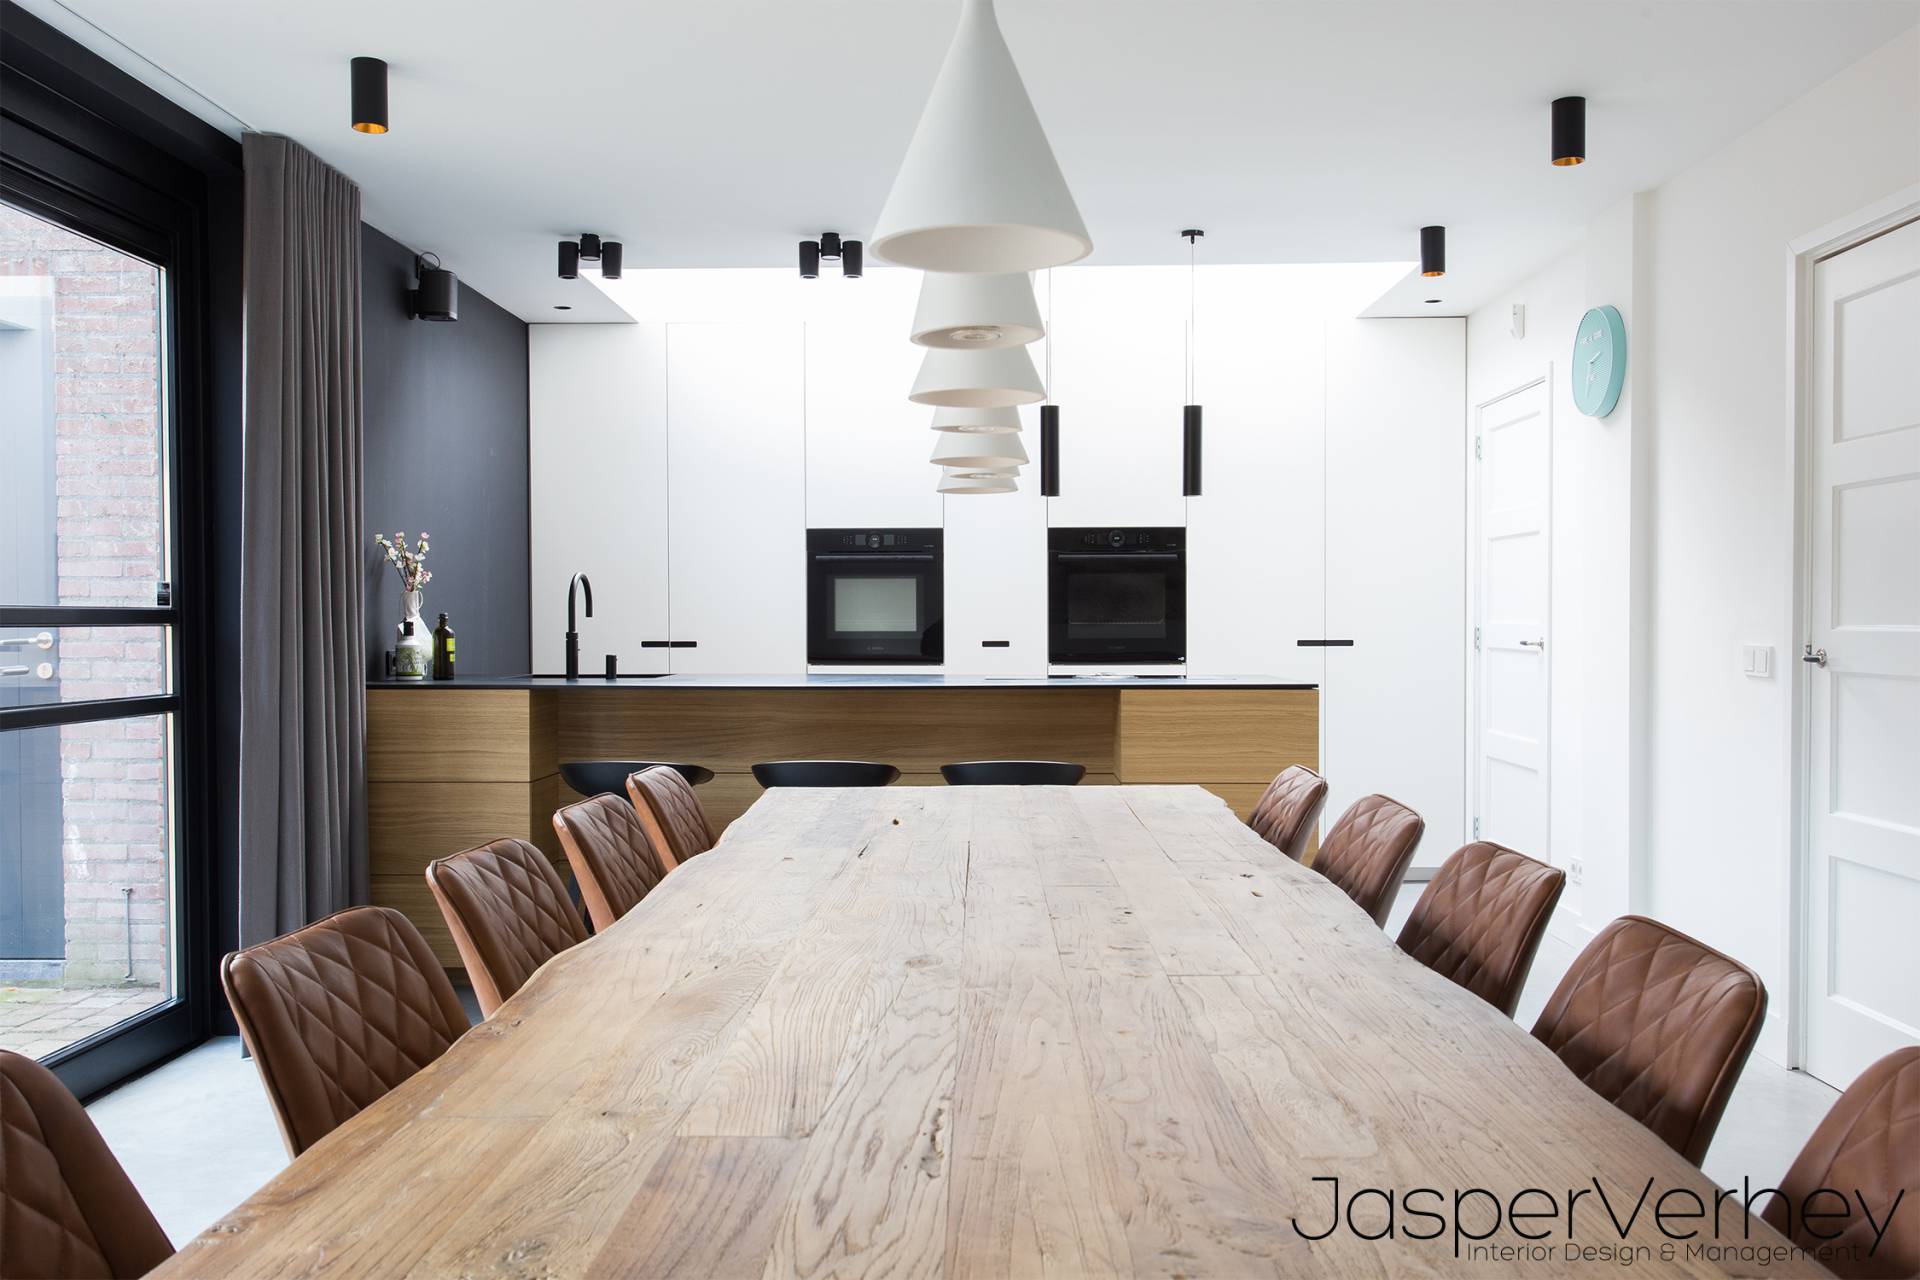 Jasper verhey lichtplan installatie